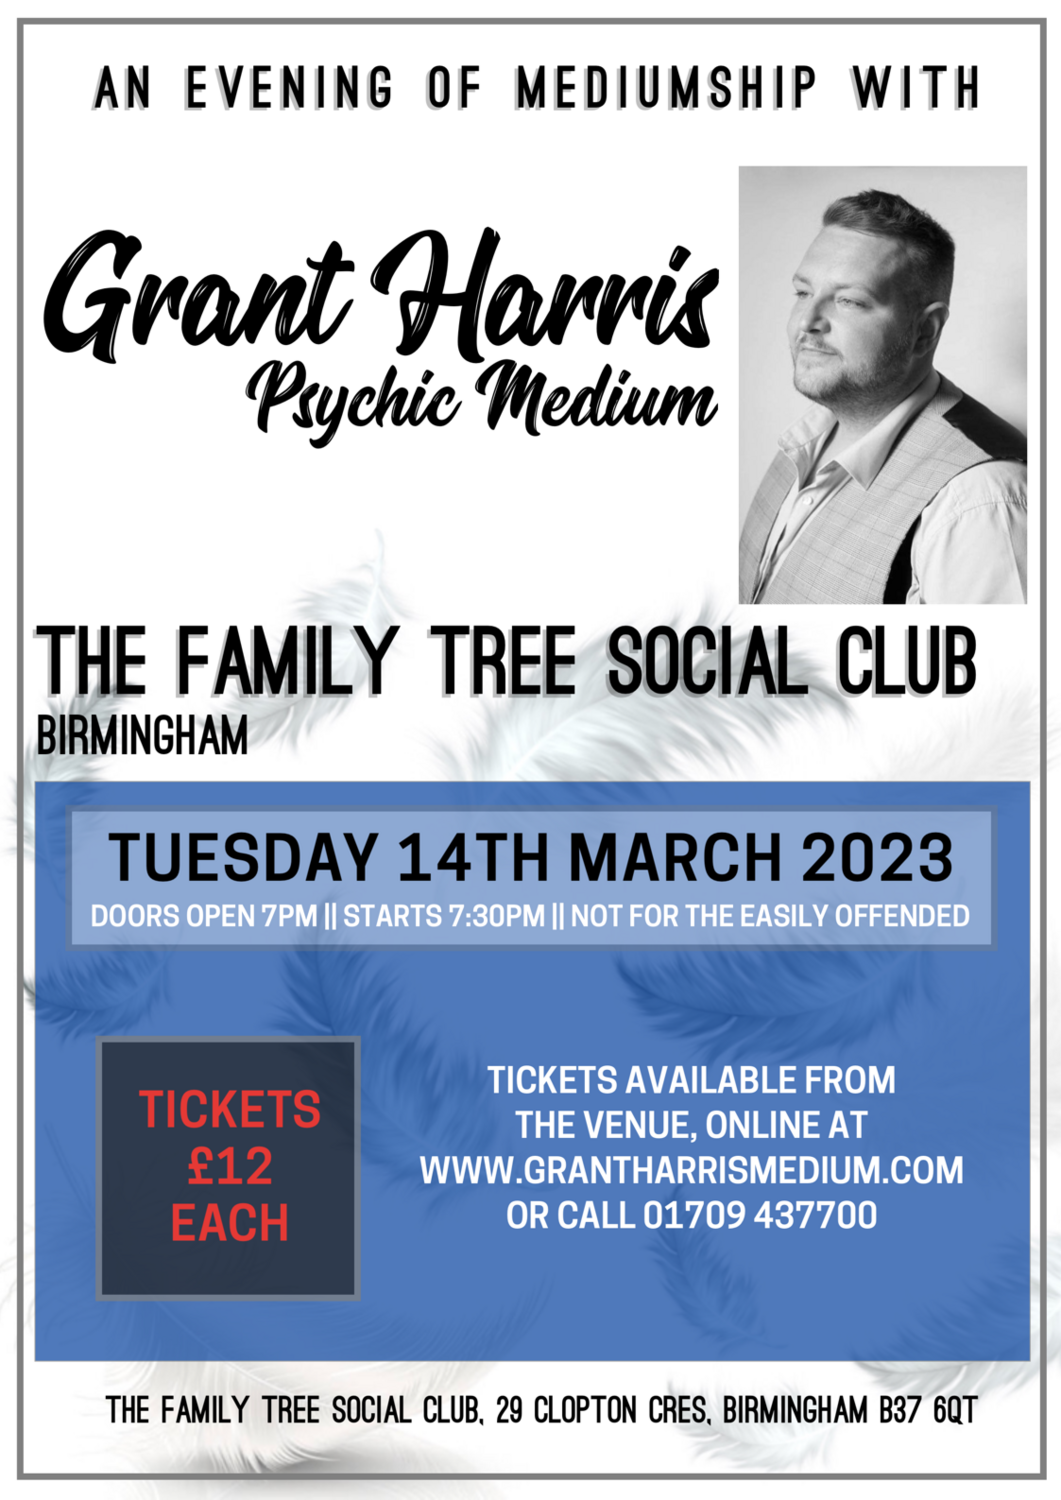 The Family Tree Social Club, Birmingham, Tuesday 14th March 2023